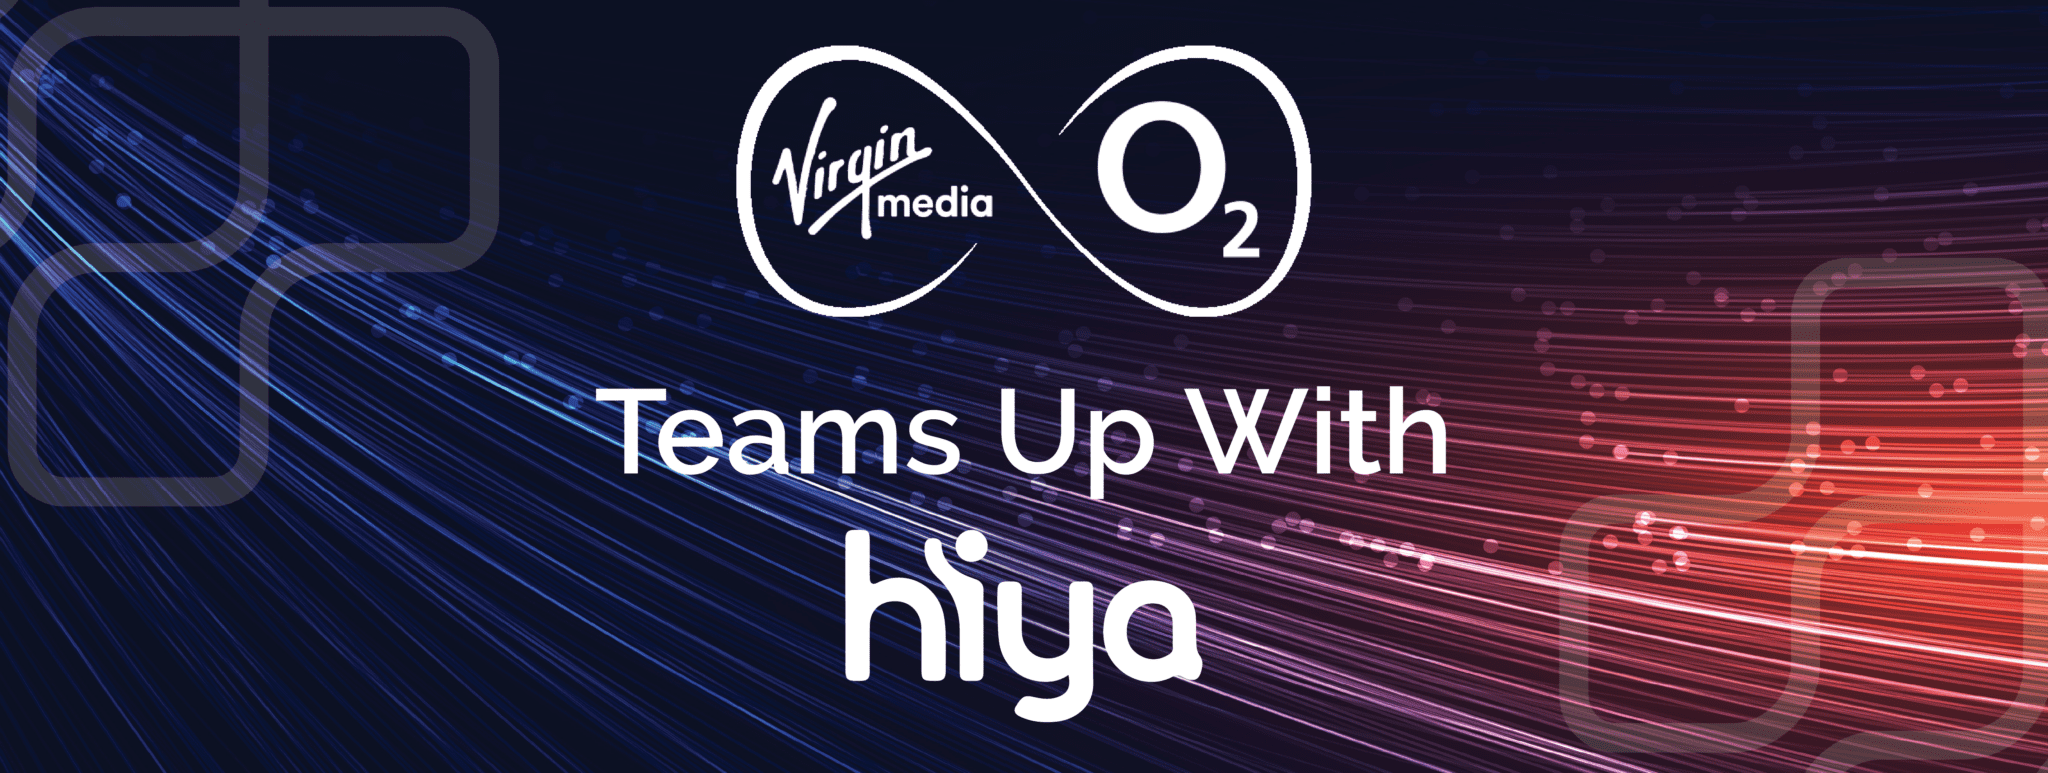 Virgin Media O2 Partners with Hiya